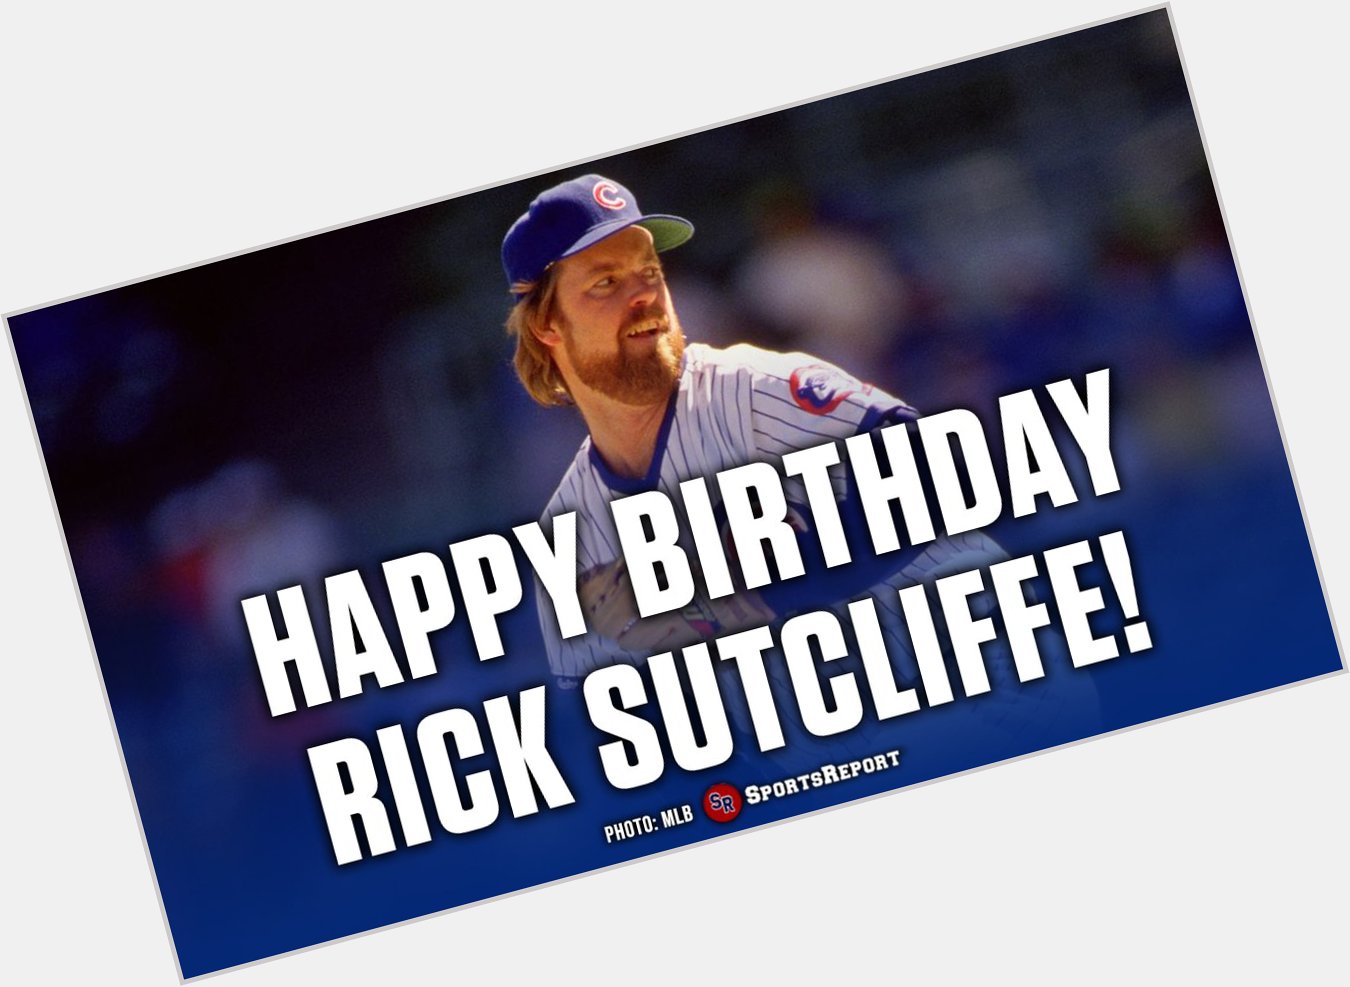  Fans, let\s wish legend Rick Sutcliffe a Happy Birthday! GO CUBS!! 